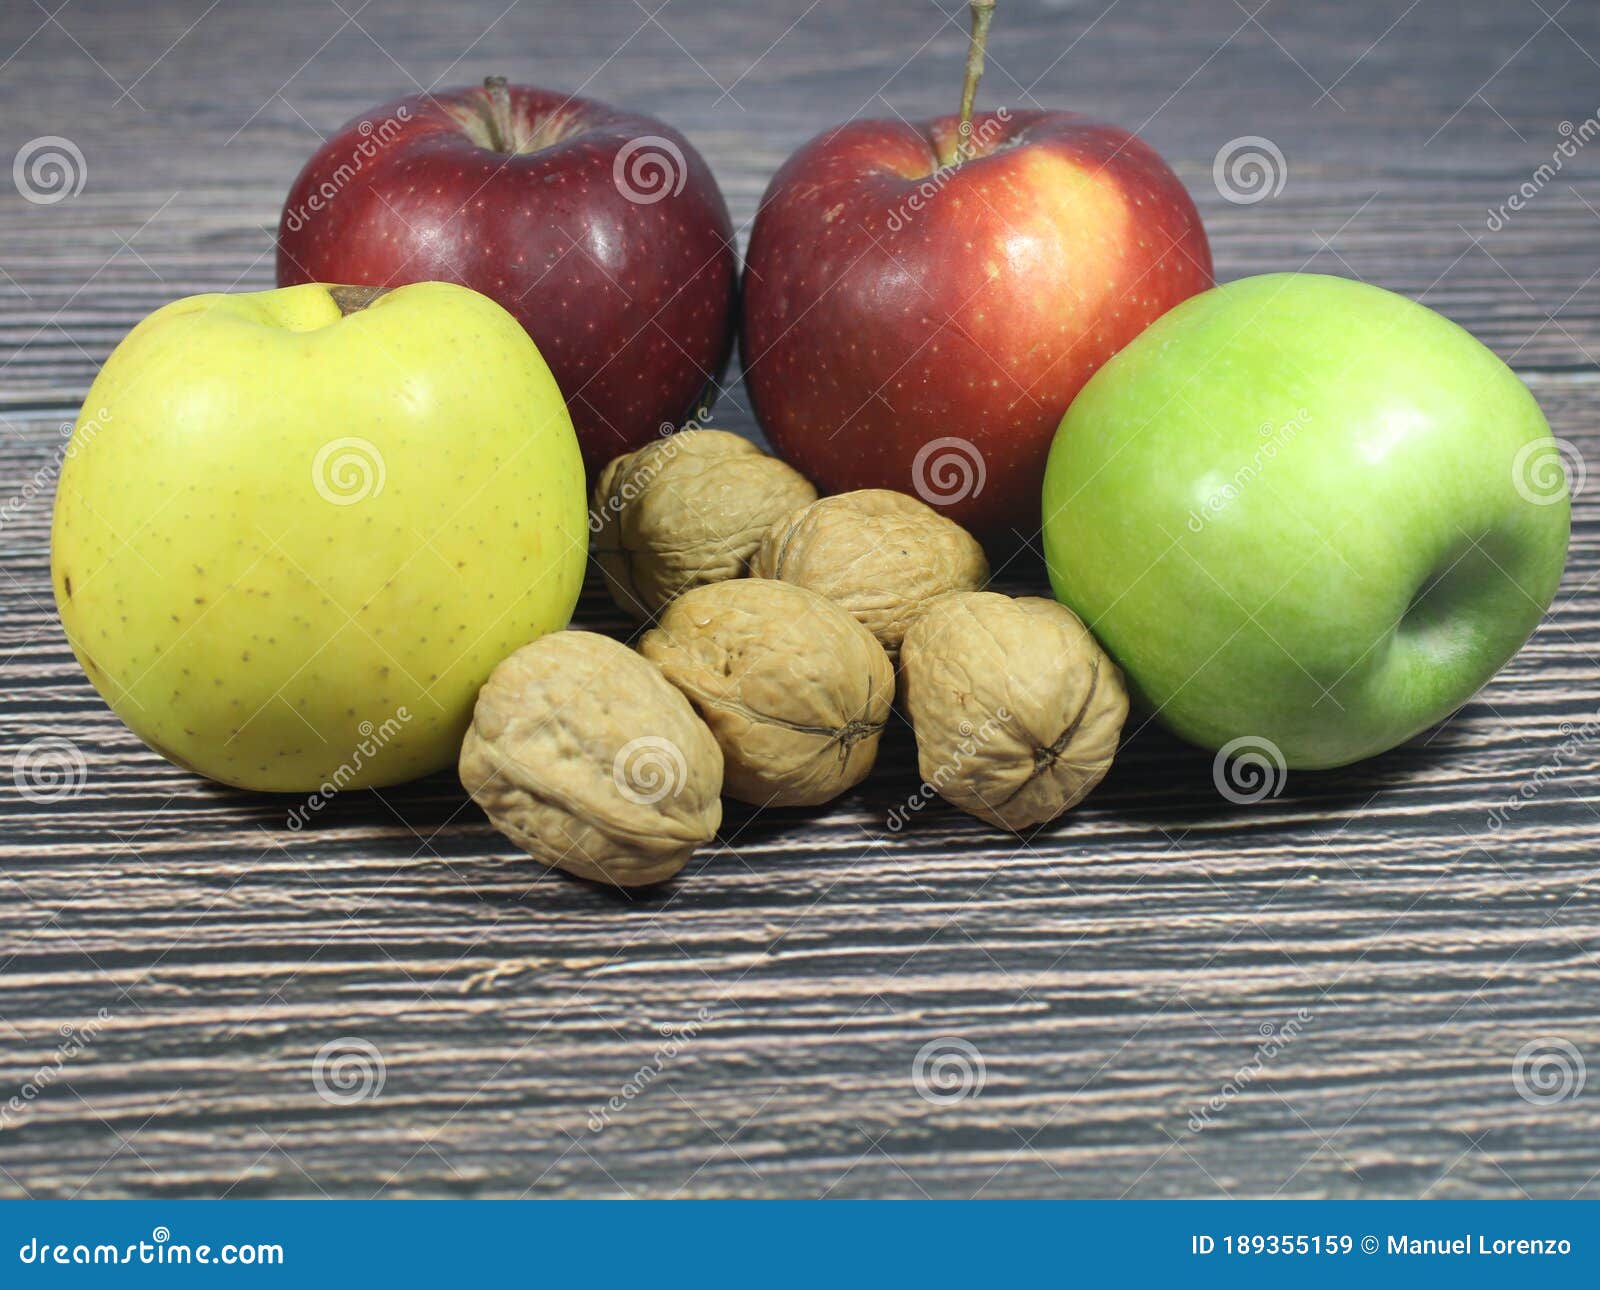 apples fruits health natural colors food flavor